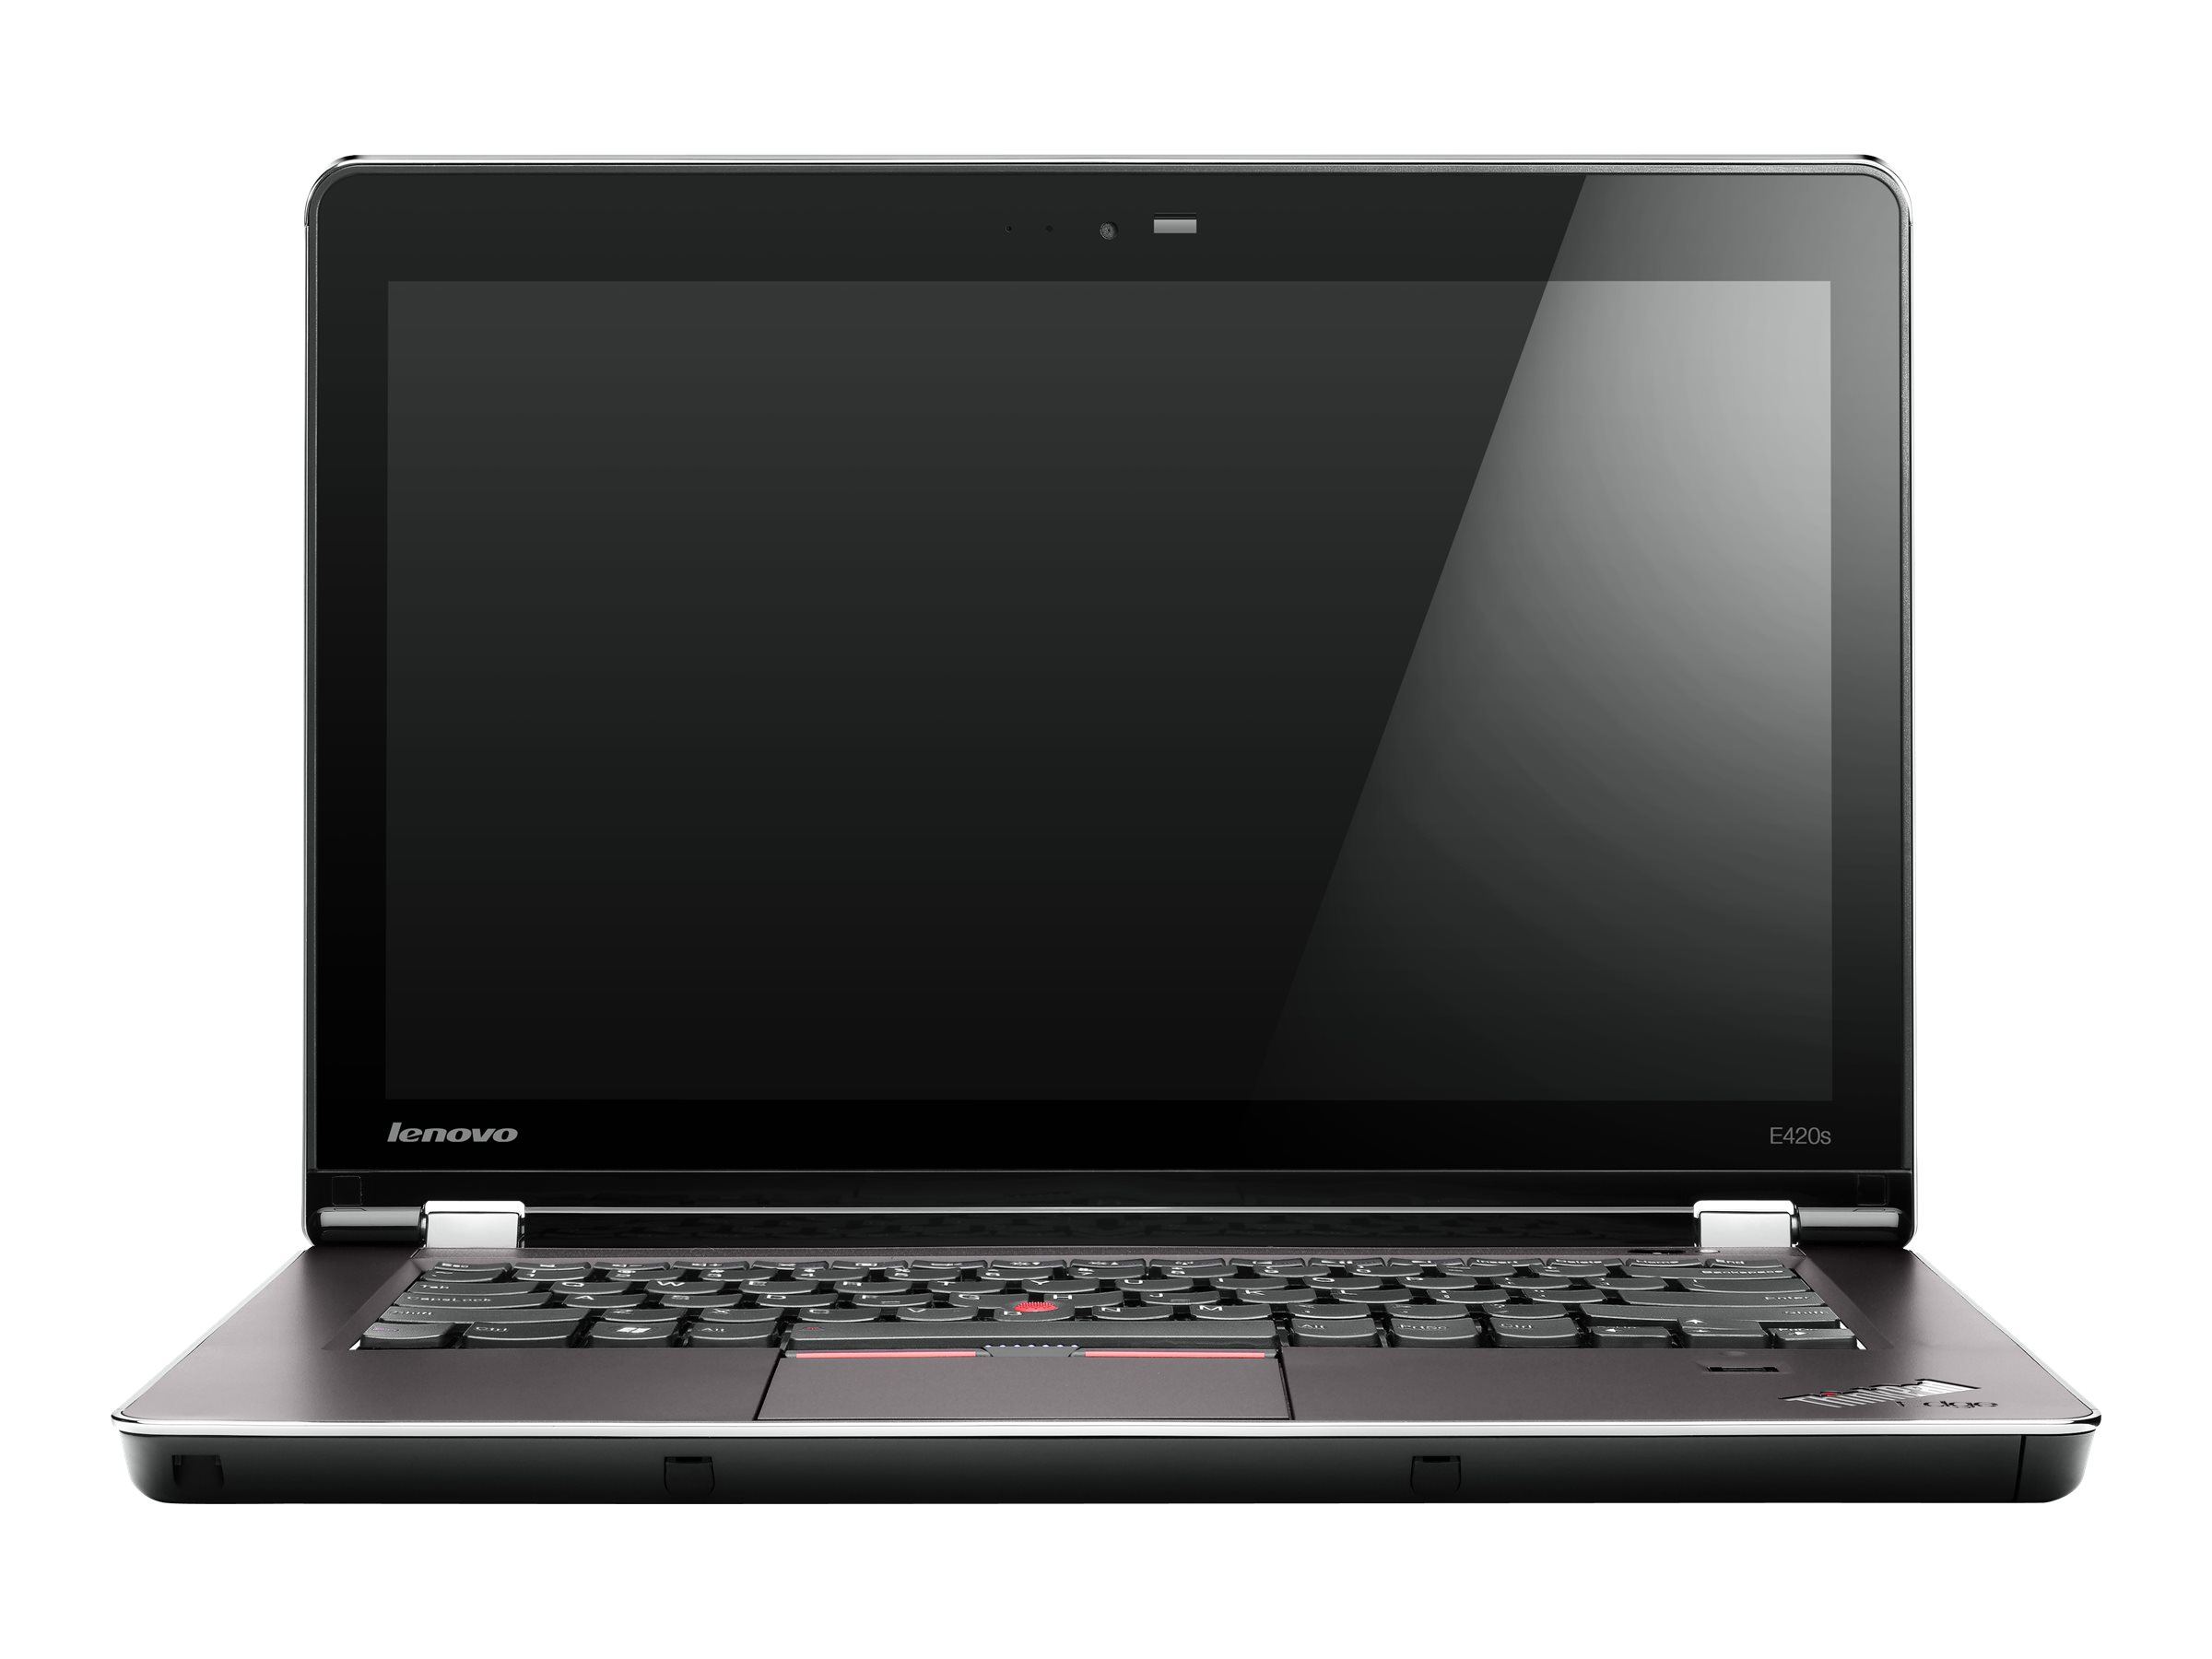 Lenovo ThinkPad Edge E420s (4401)